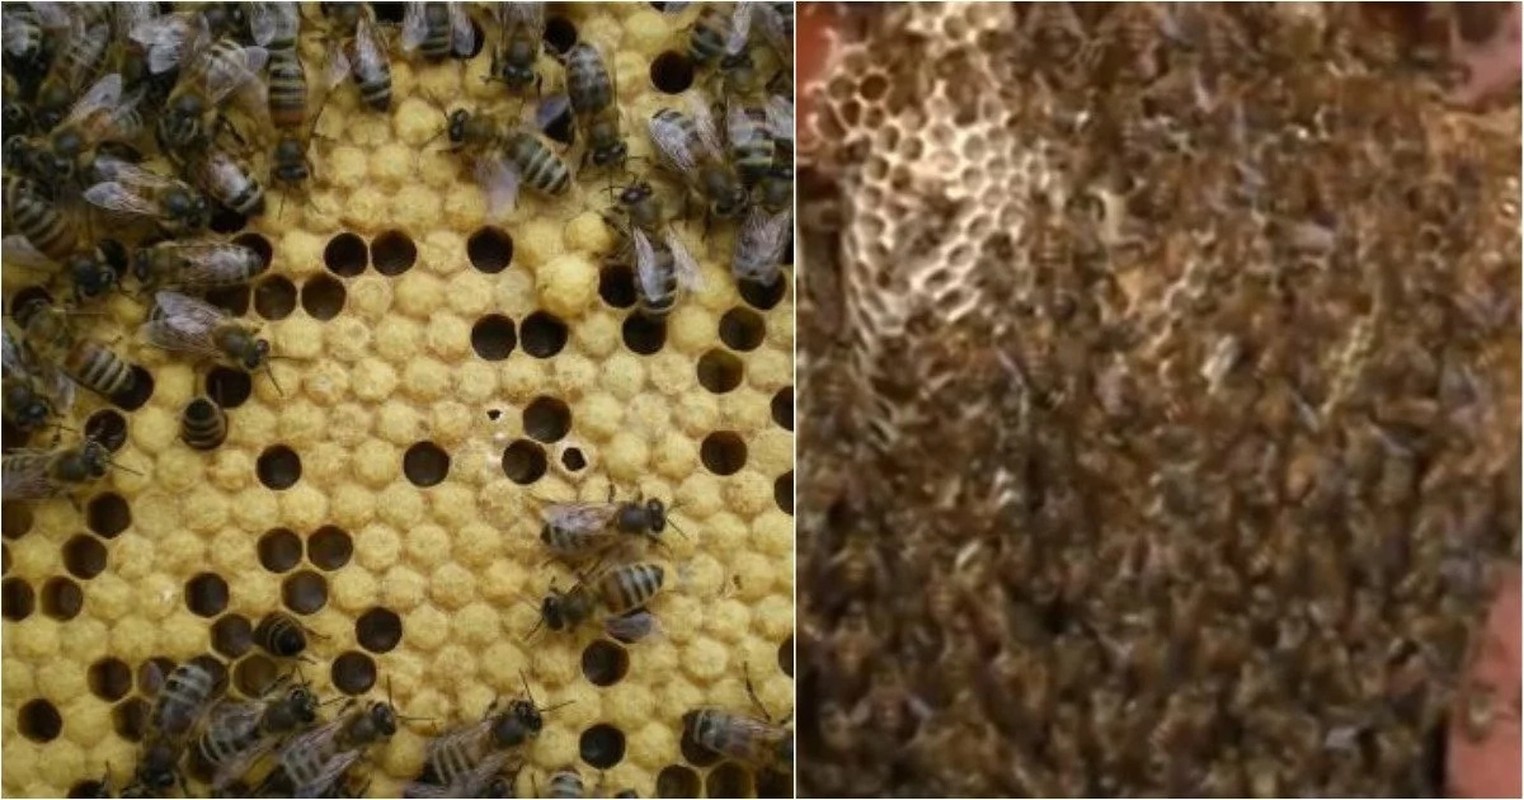 Thu nhap khung nho to ong o trong nha suot 12 nam-Hinh-6